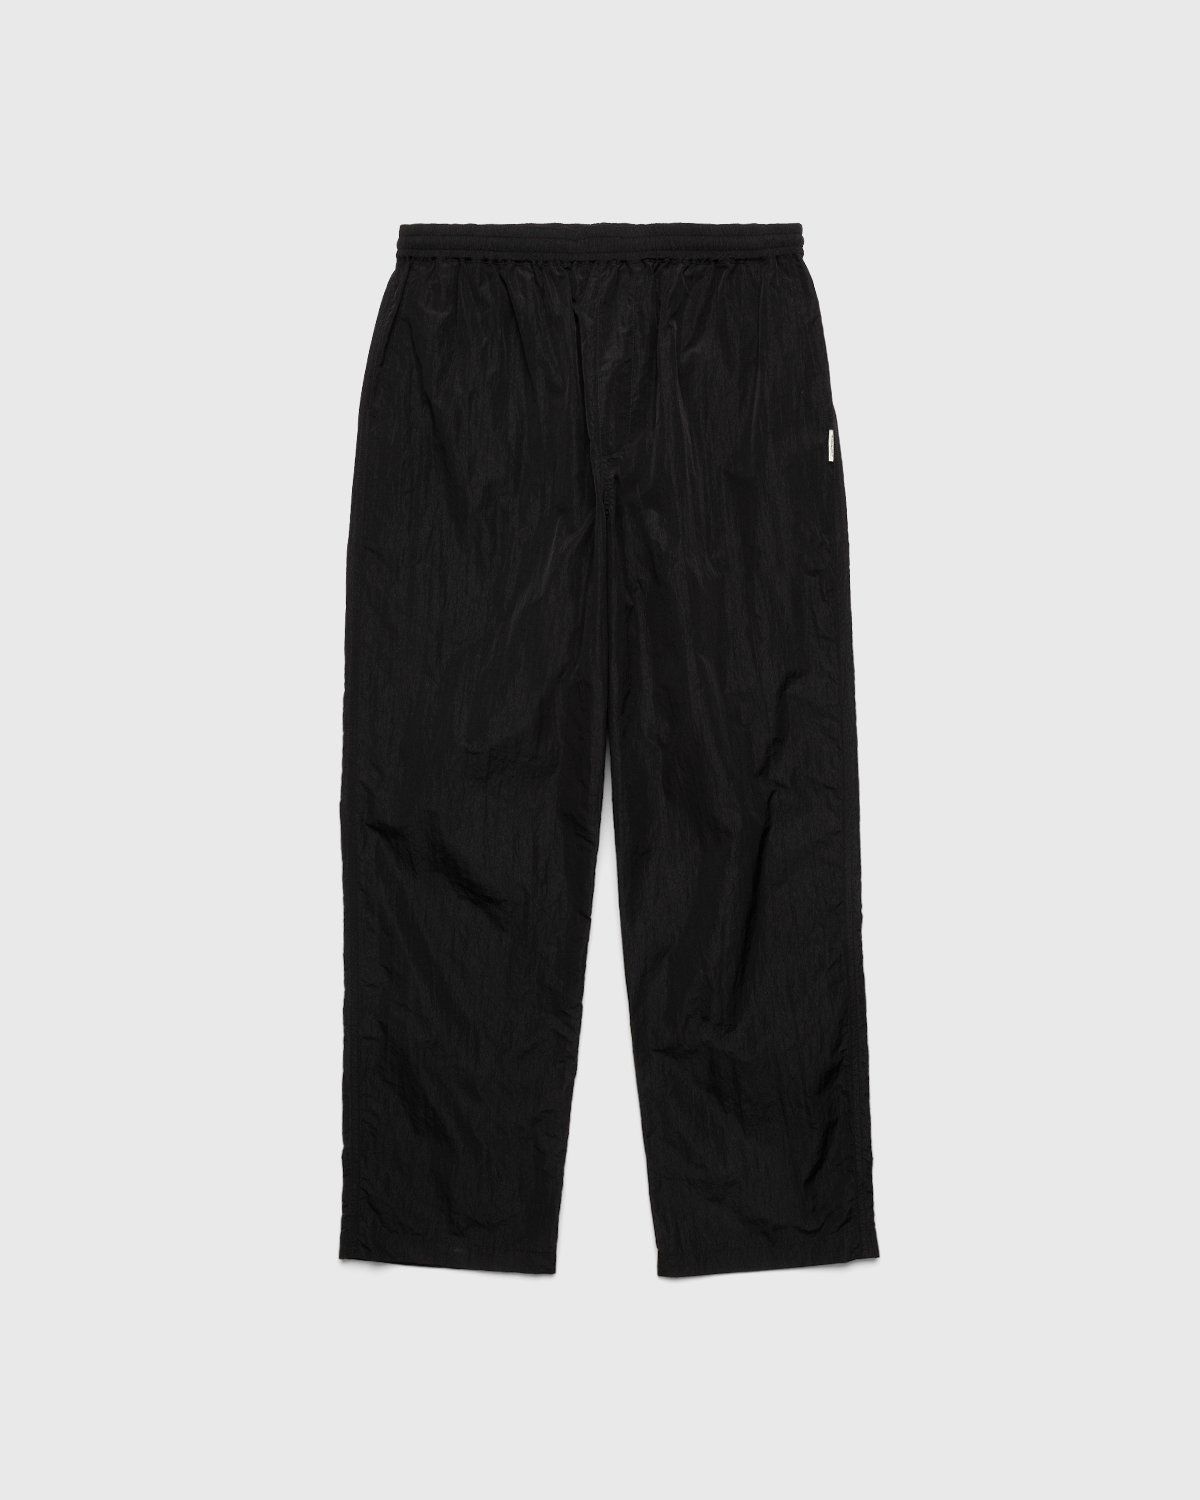 Highsnobiety – Crepe Nylon Elastic Pants Black - Pants - Black - Image 1